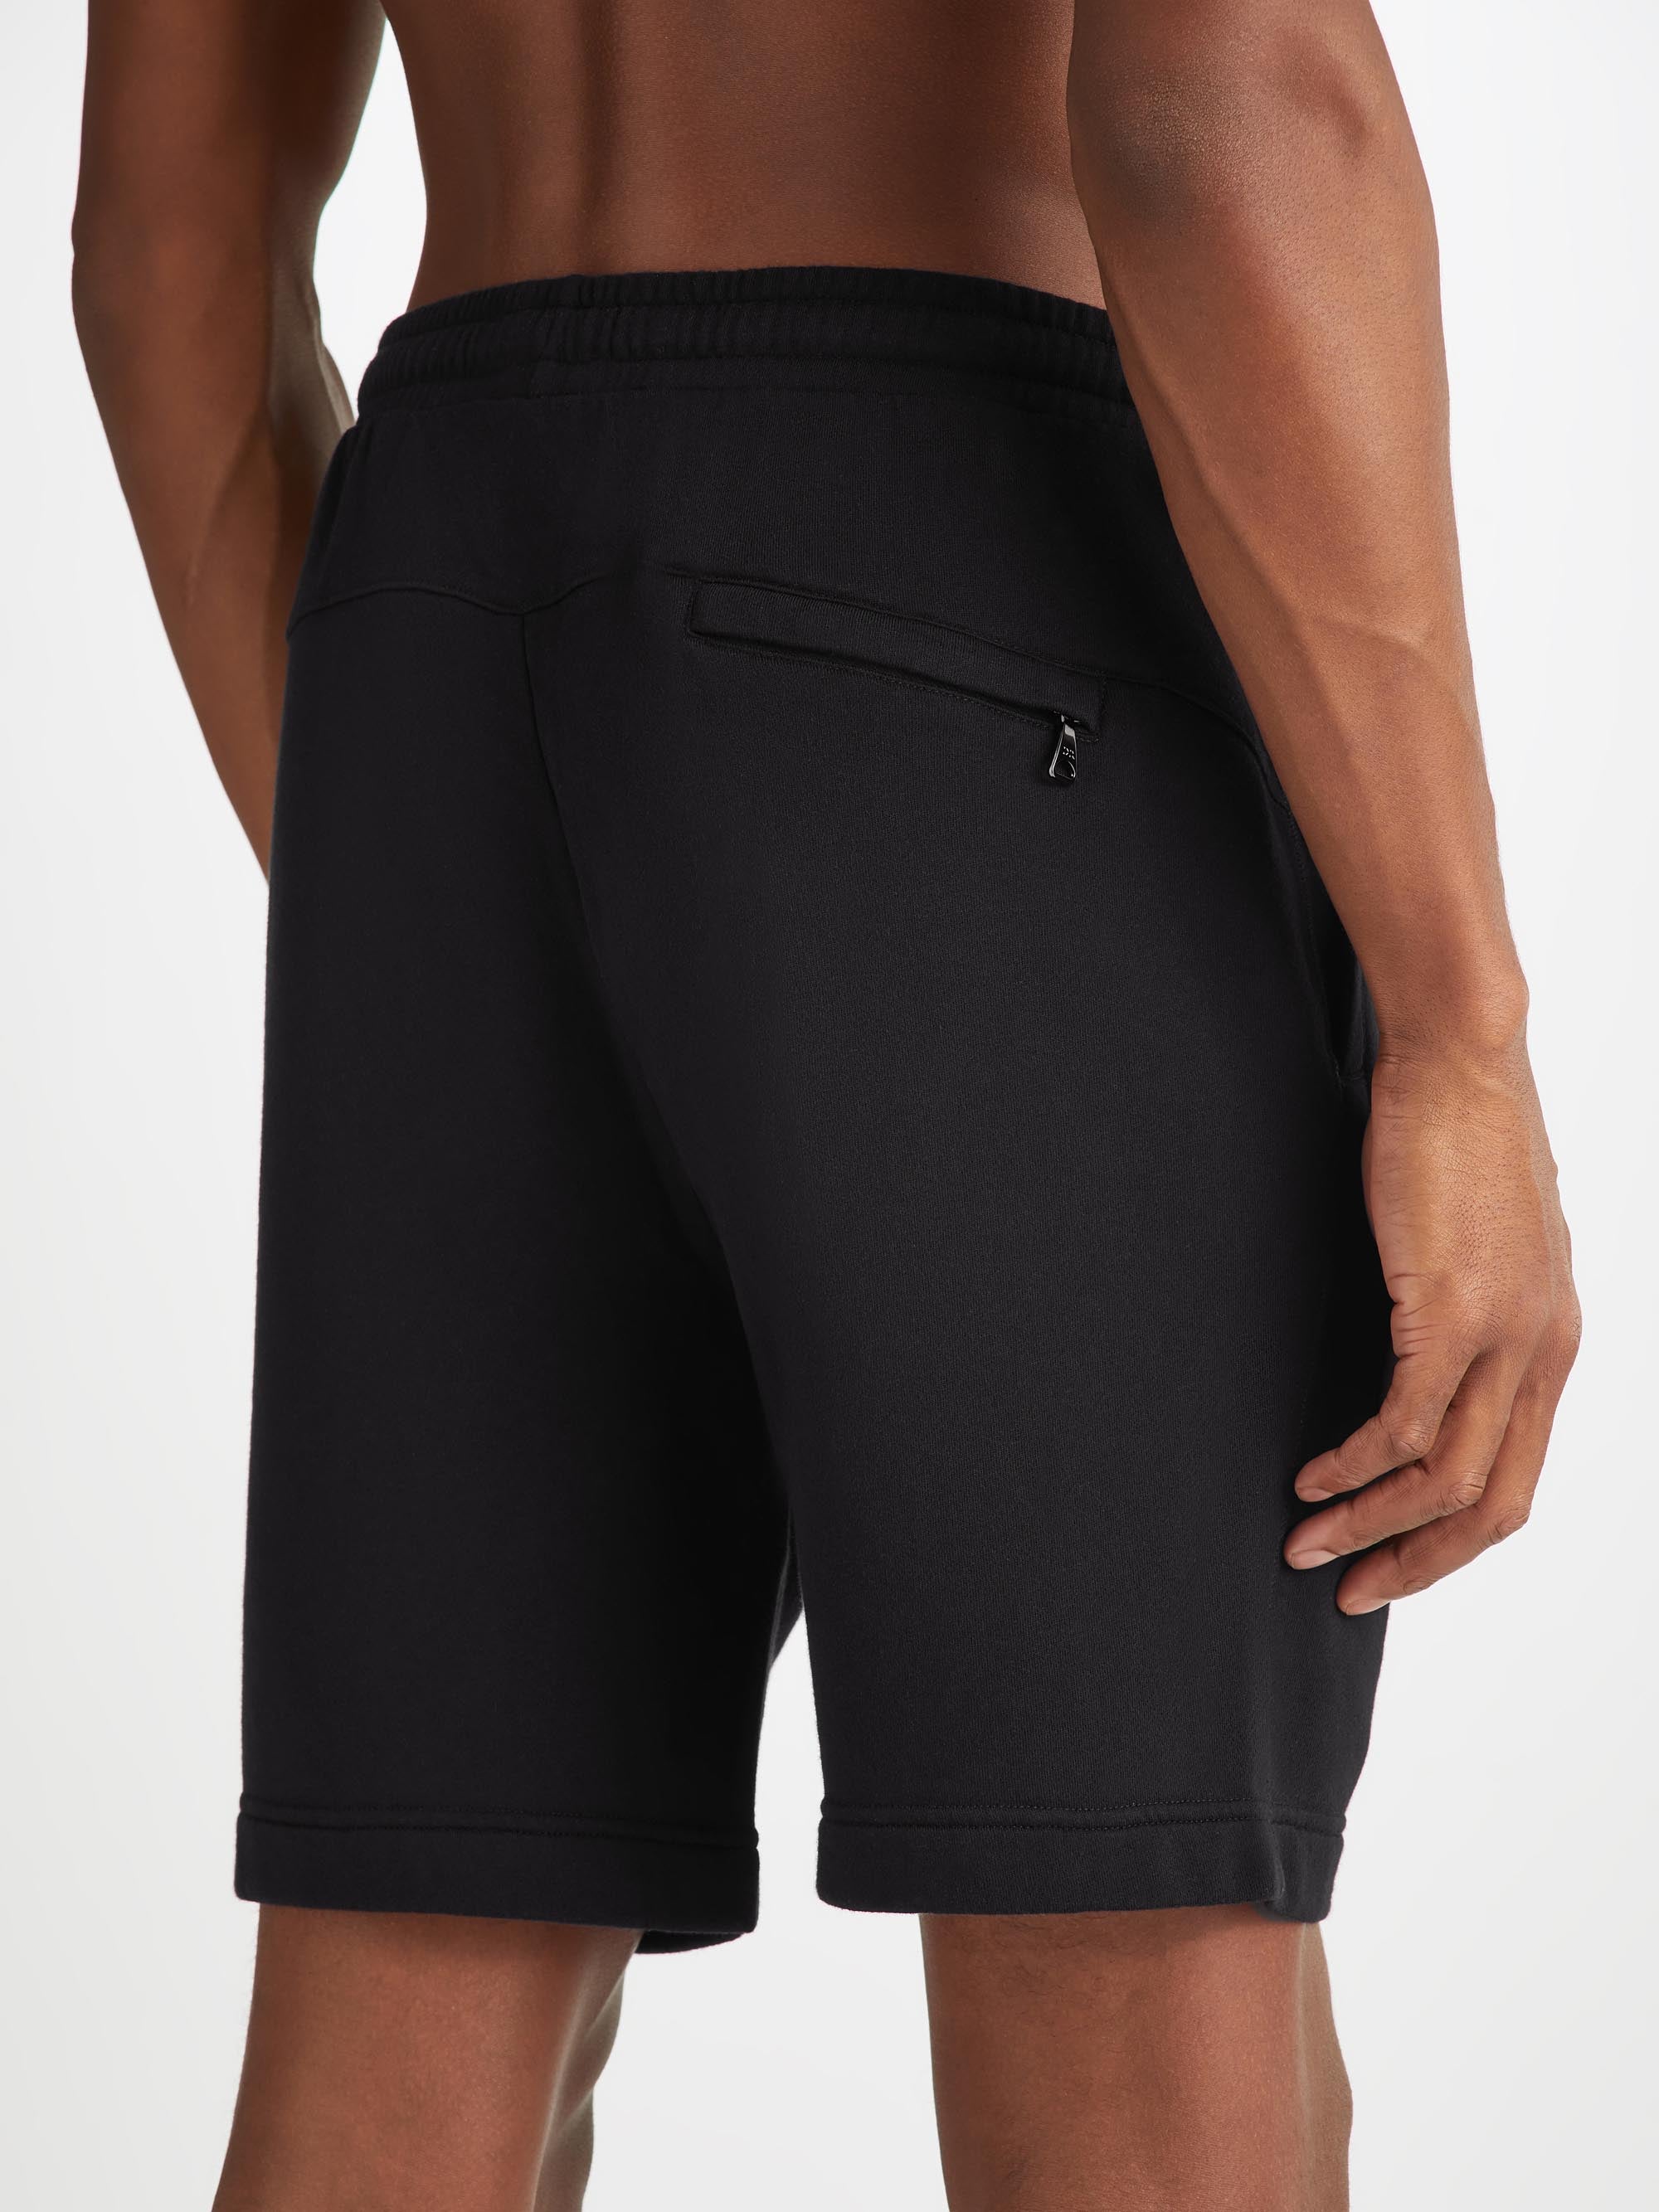 Men's Sweat Shorts Quinn Cotton Modal Black